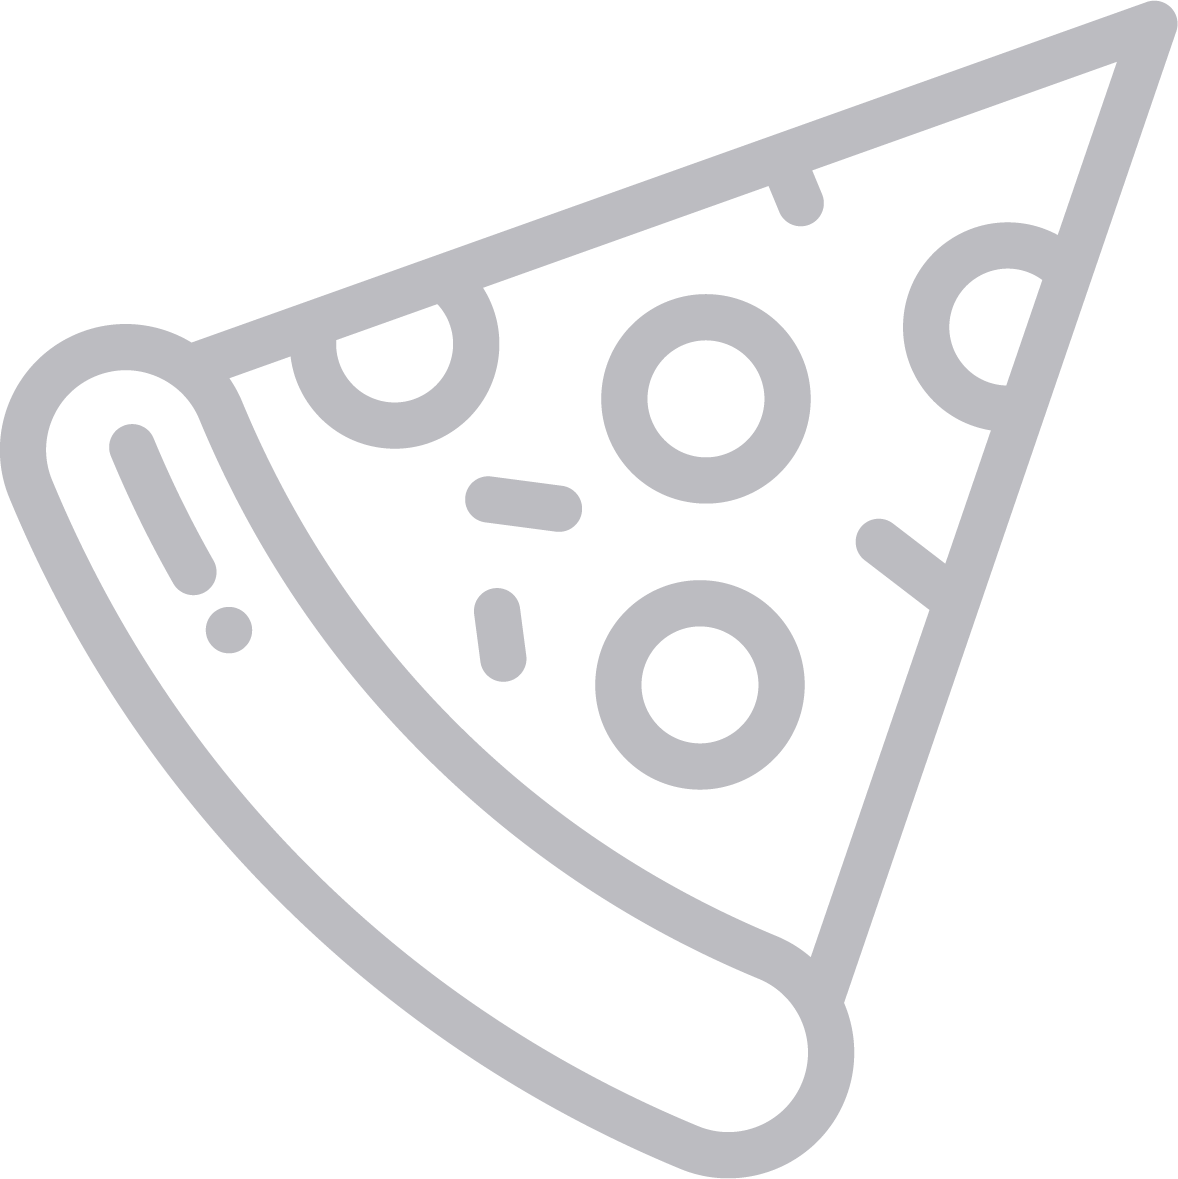 005-pizza